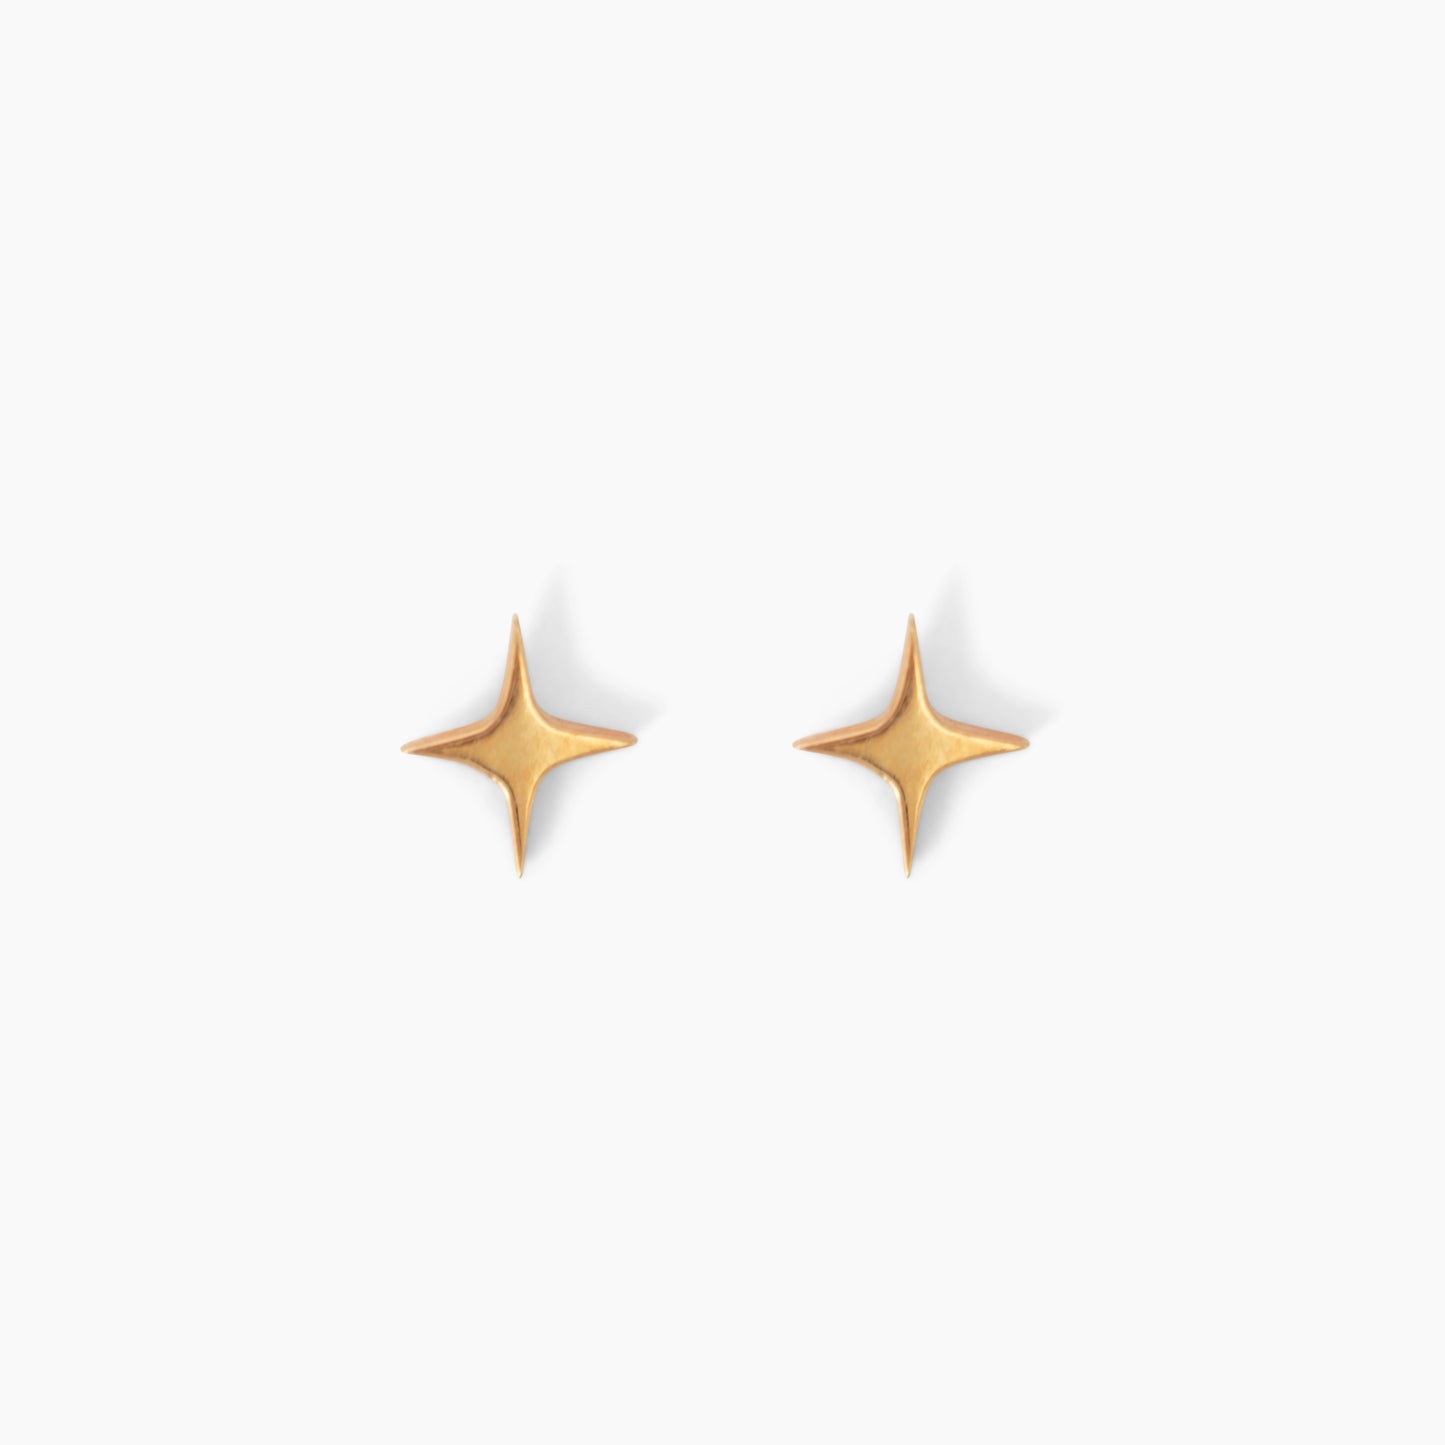 Atomic Starburst Earrings